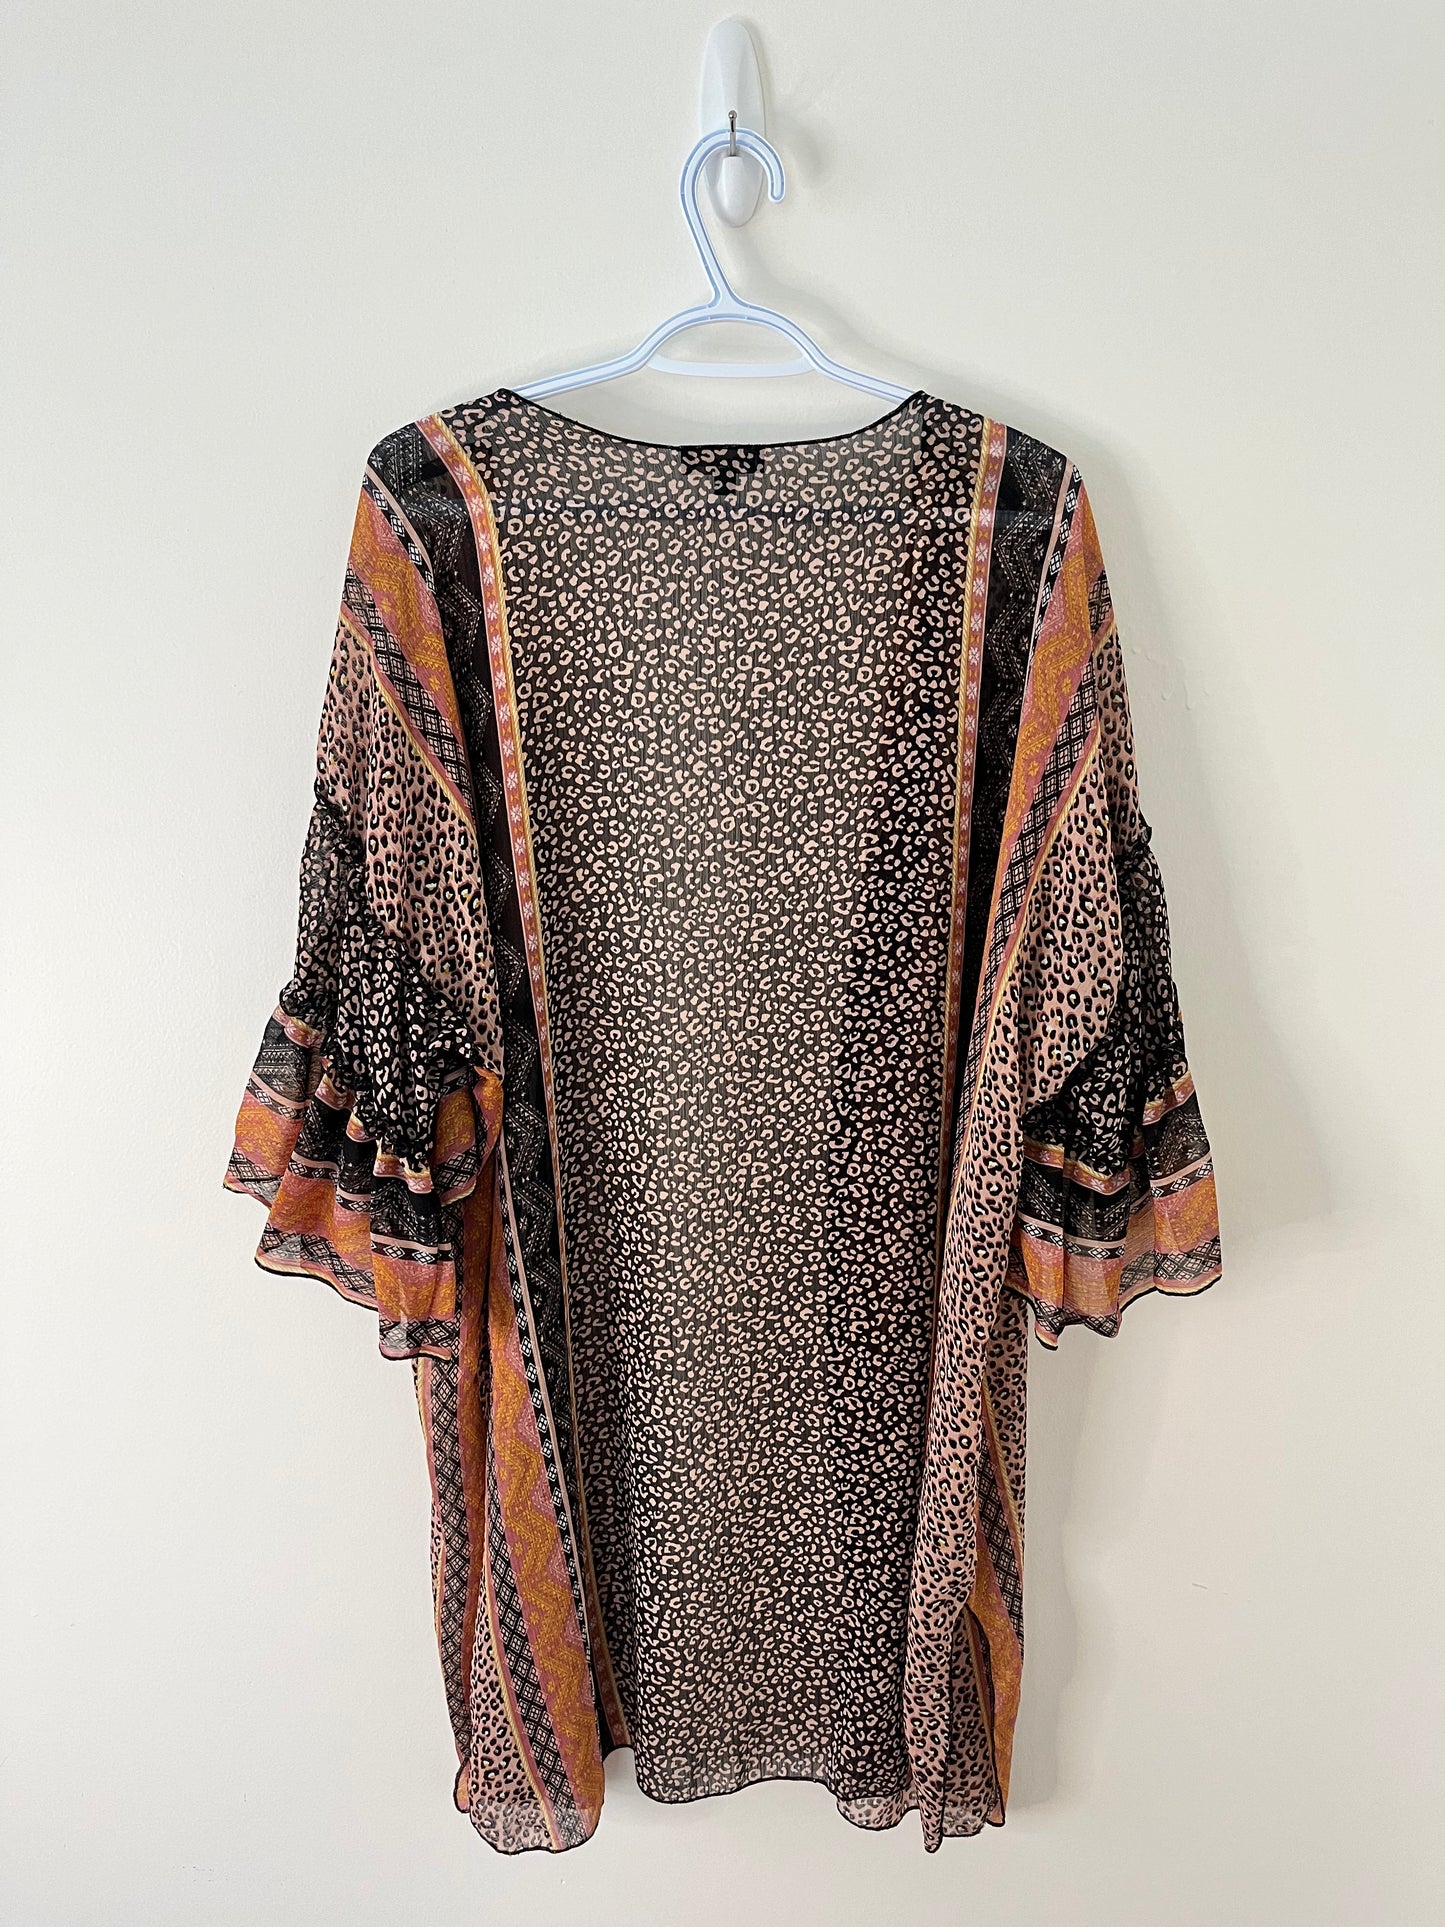 Leopard + Mixed Print Kimono-Style Blouse (Multi-Size)